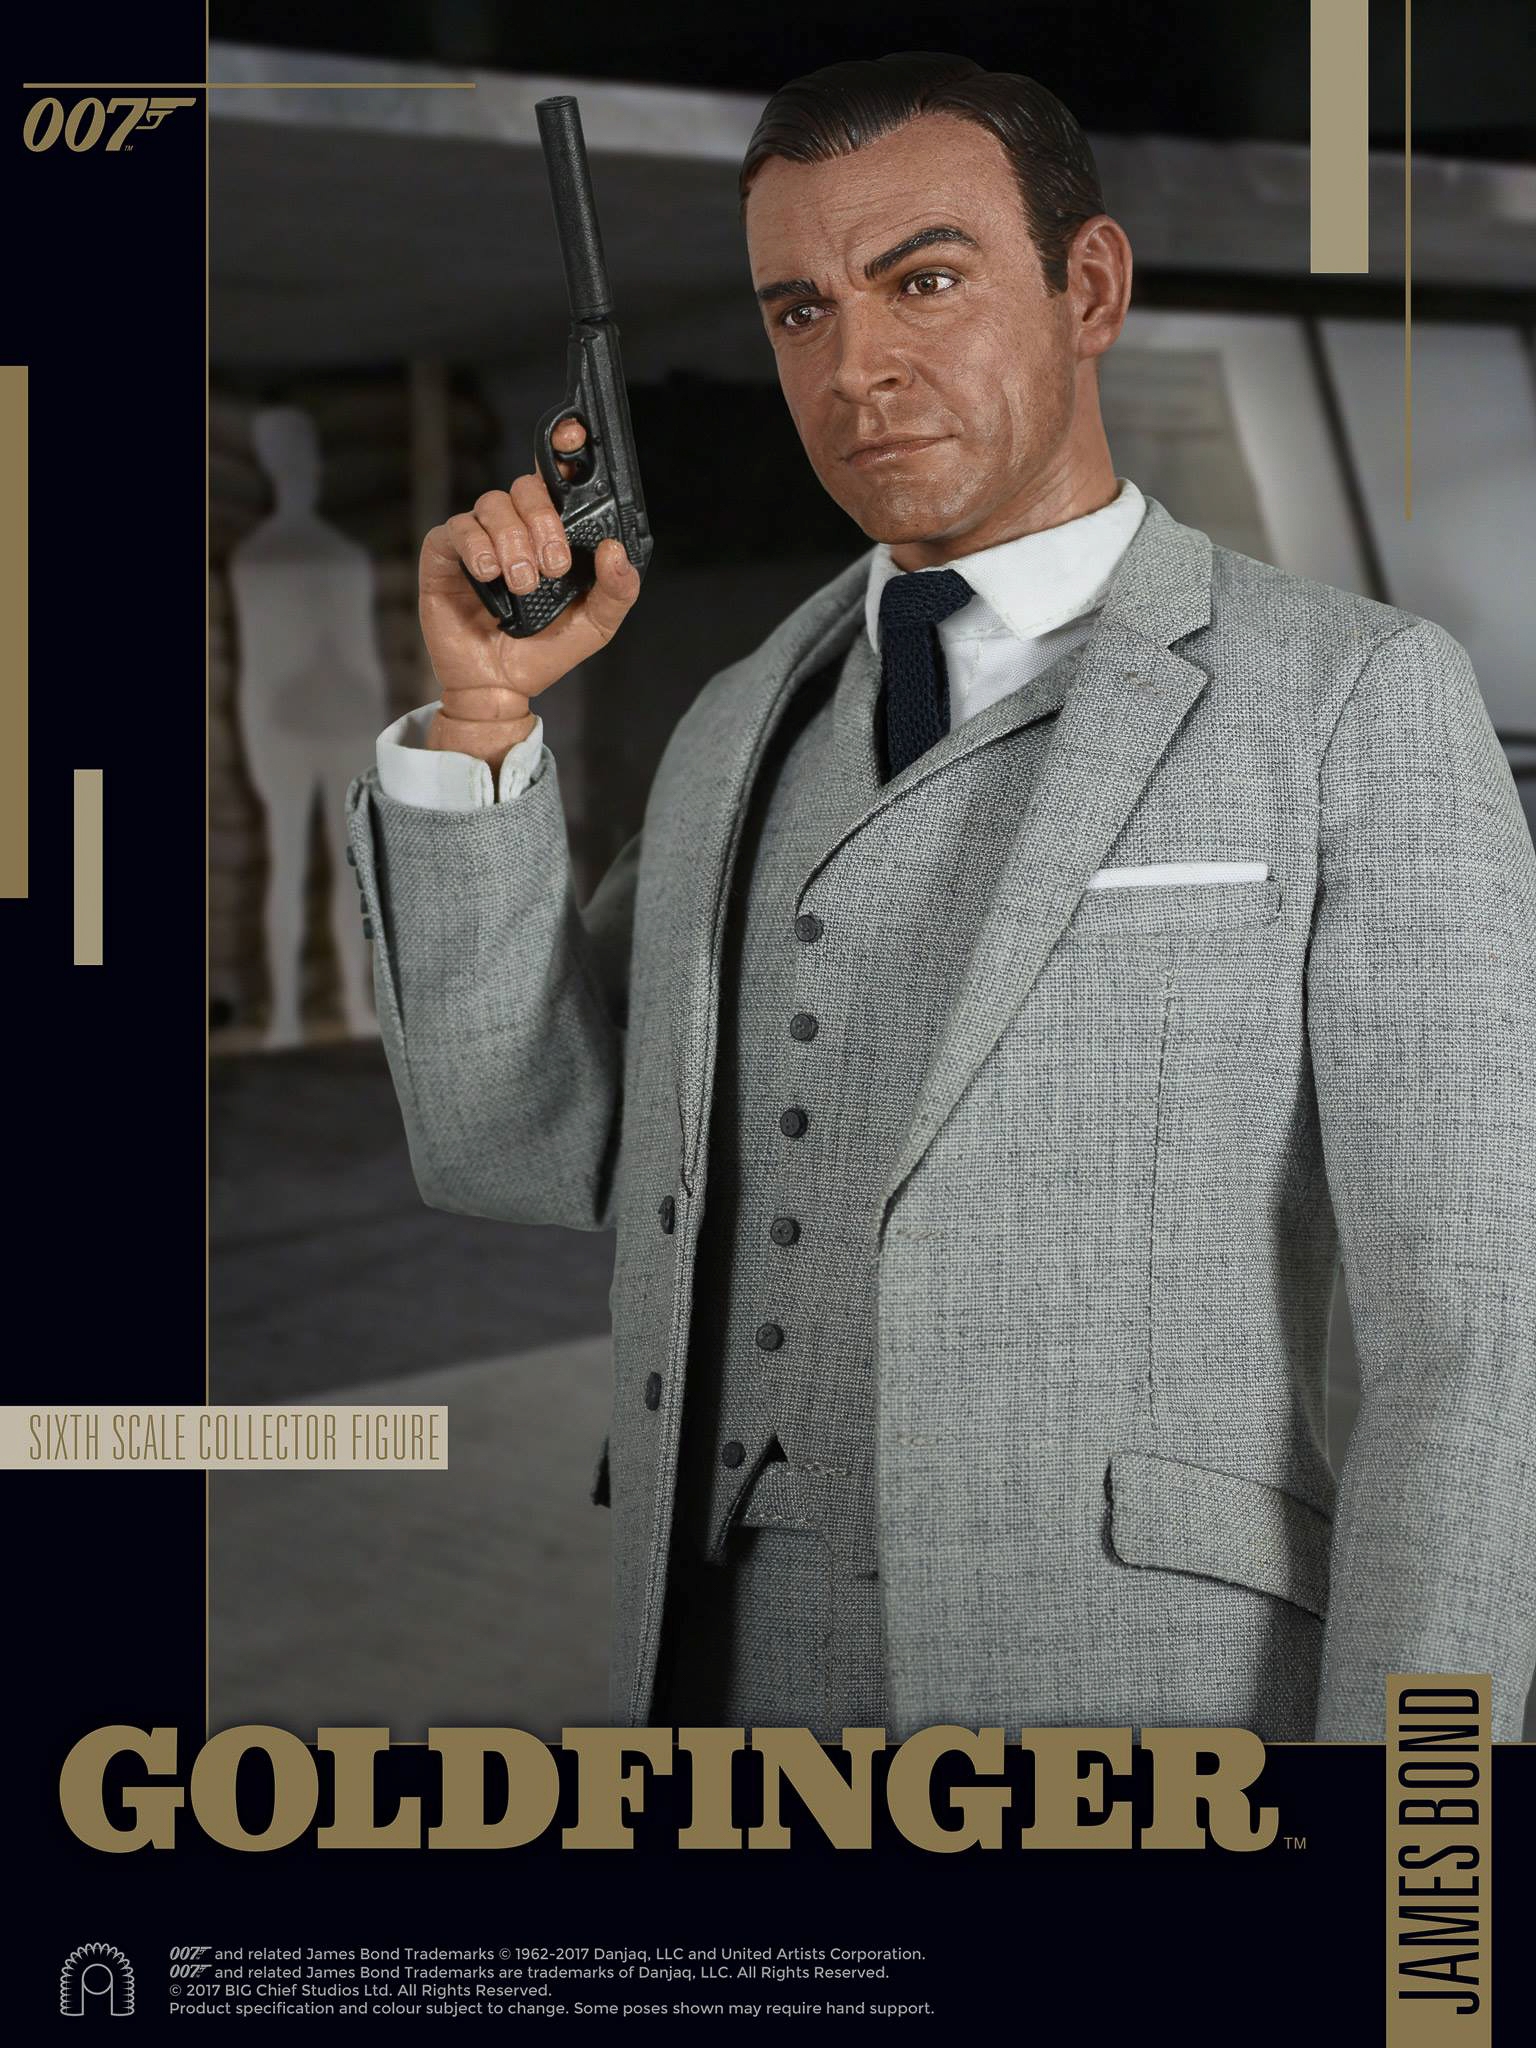 Big-Chief-James-Bond-Goldfinger-Oddjob-Full-Reveal-013.jpg